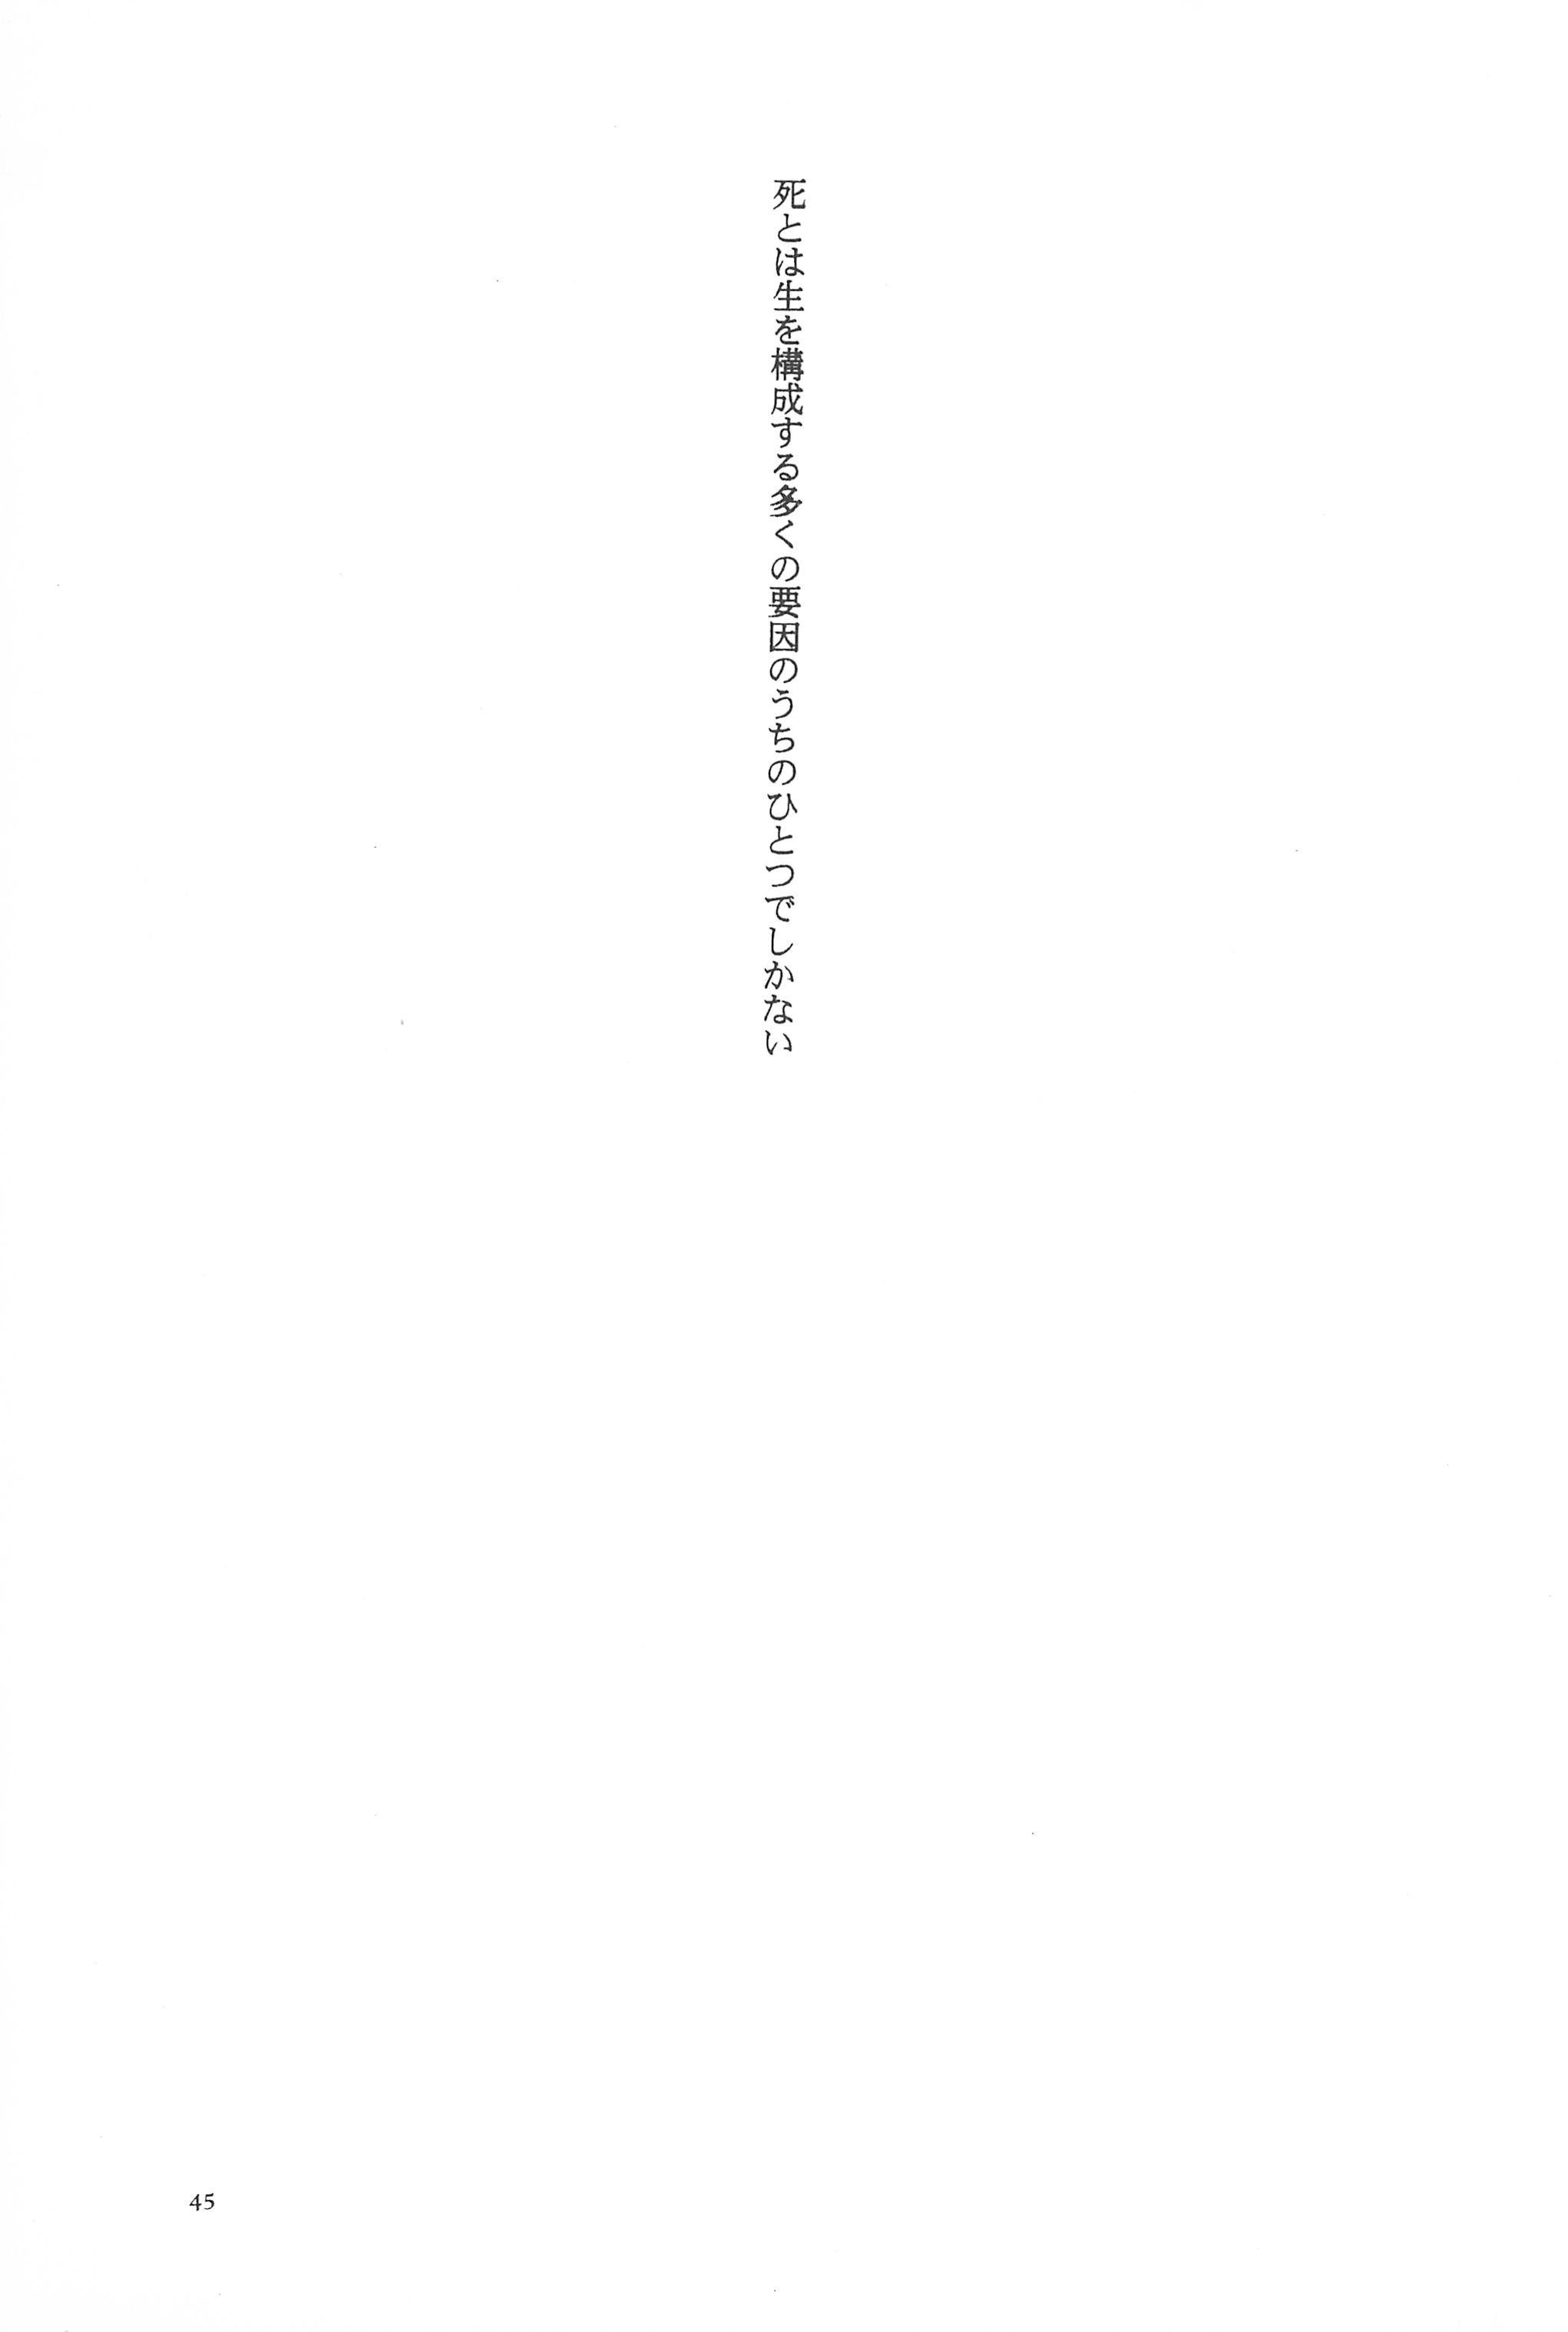 (Cレヴォ19) [あなごパイ (こんどう辰也、坂都胡桃)] Black Box Vol.001 完全版